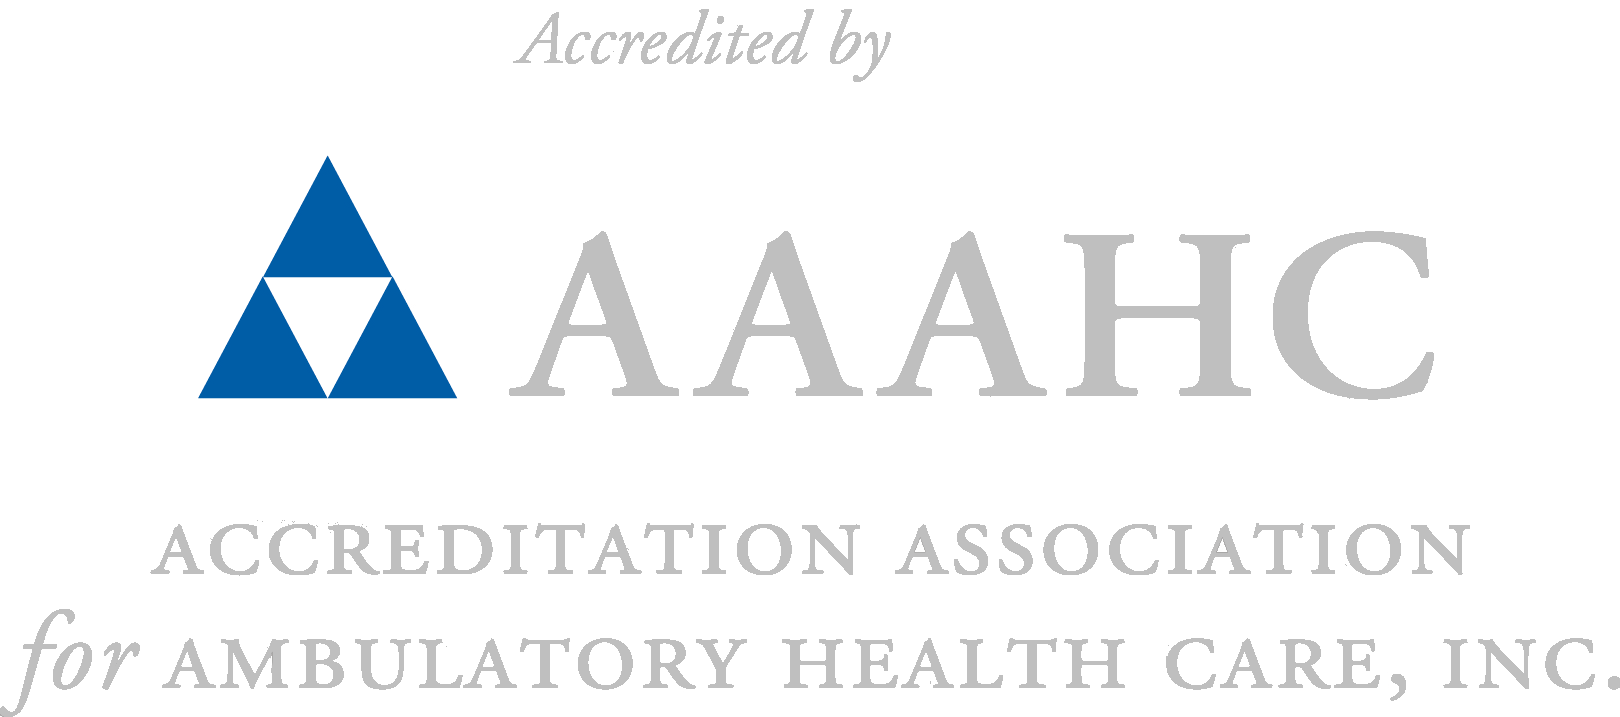 Accreditation Association for Ambulatory Health Care, Inc. logo